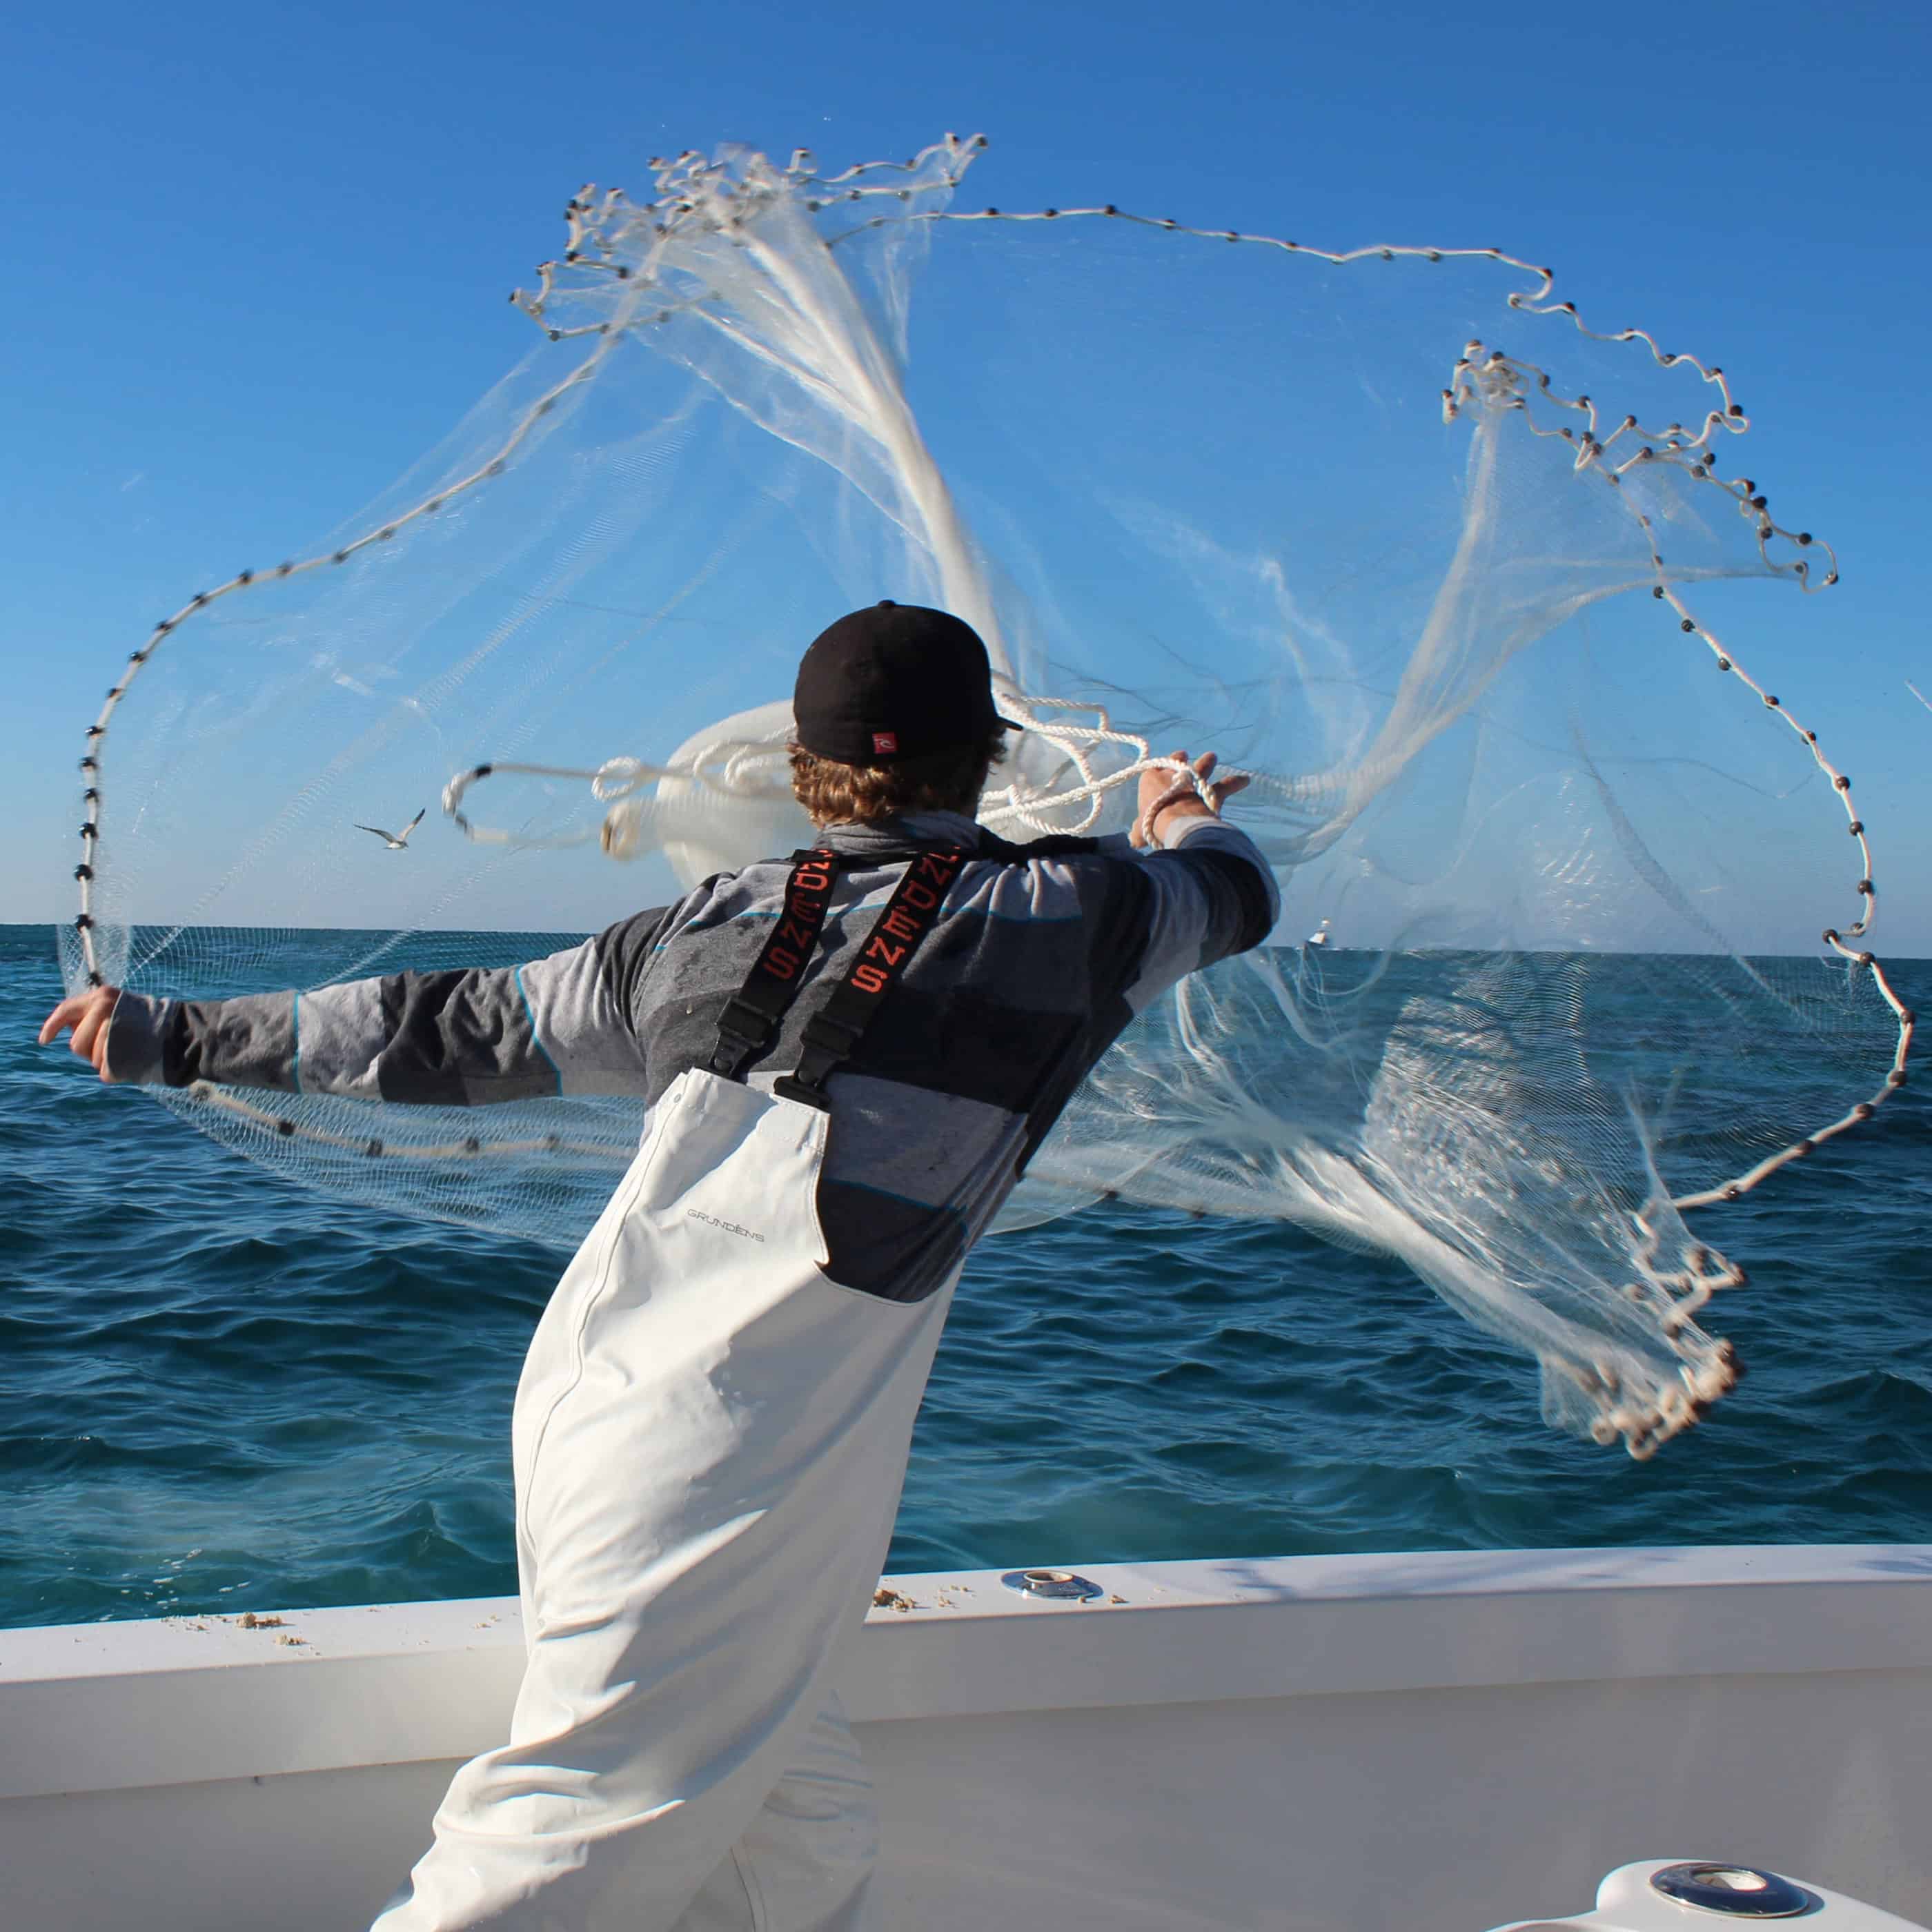 Cast Net Fishing in California on Meeting Agenda